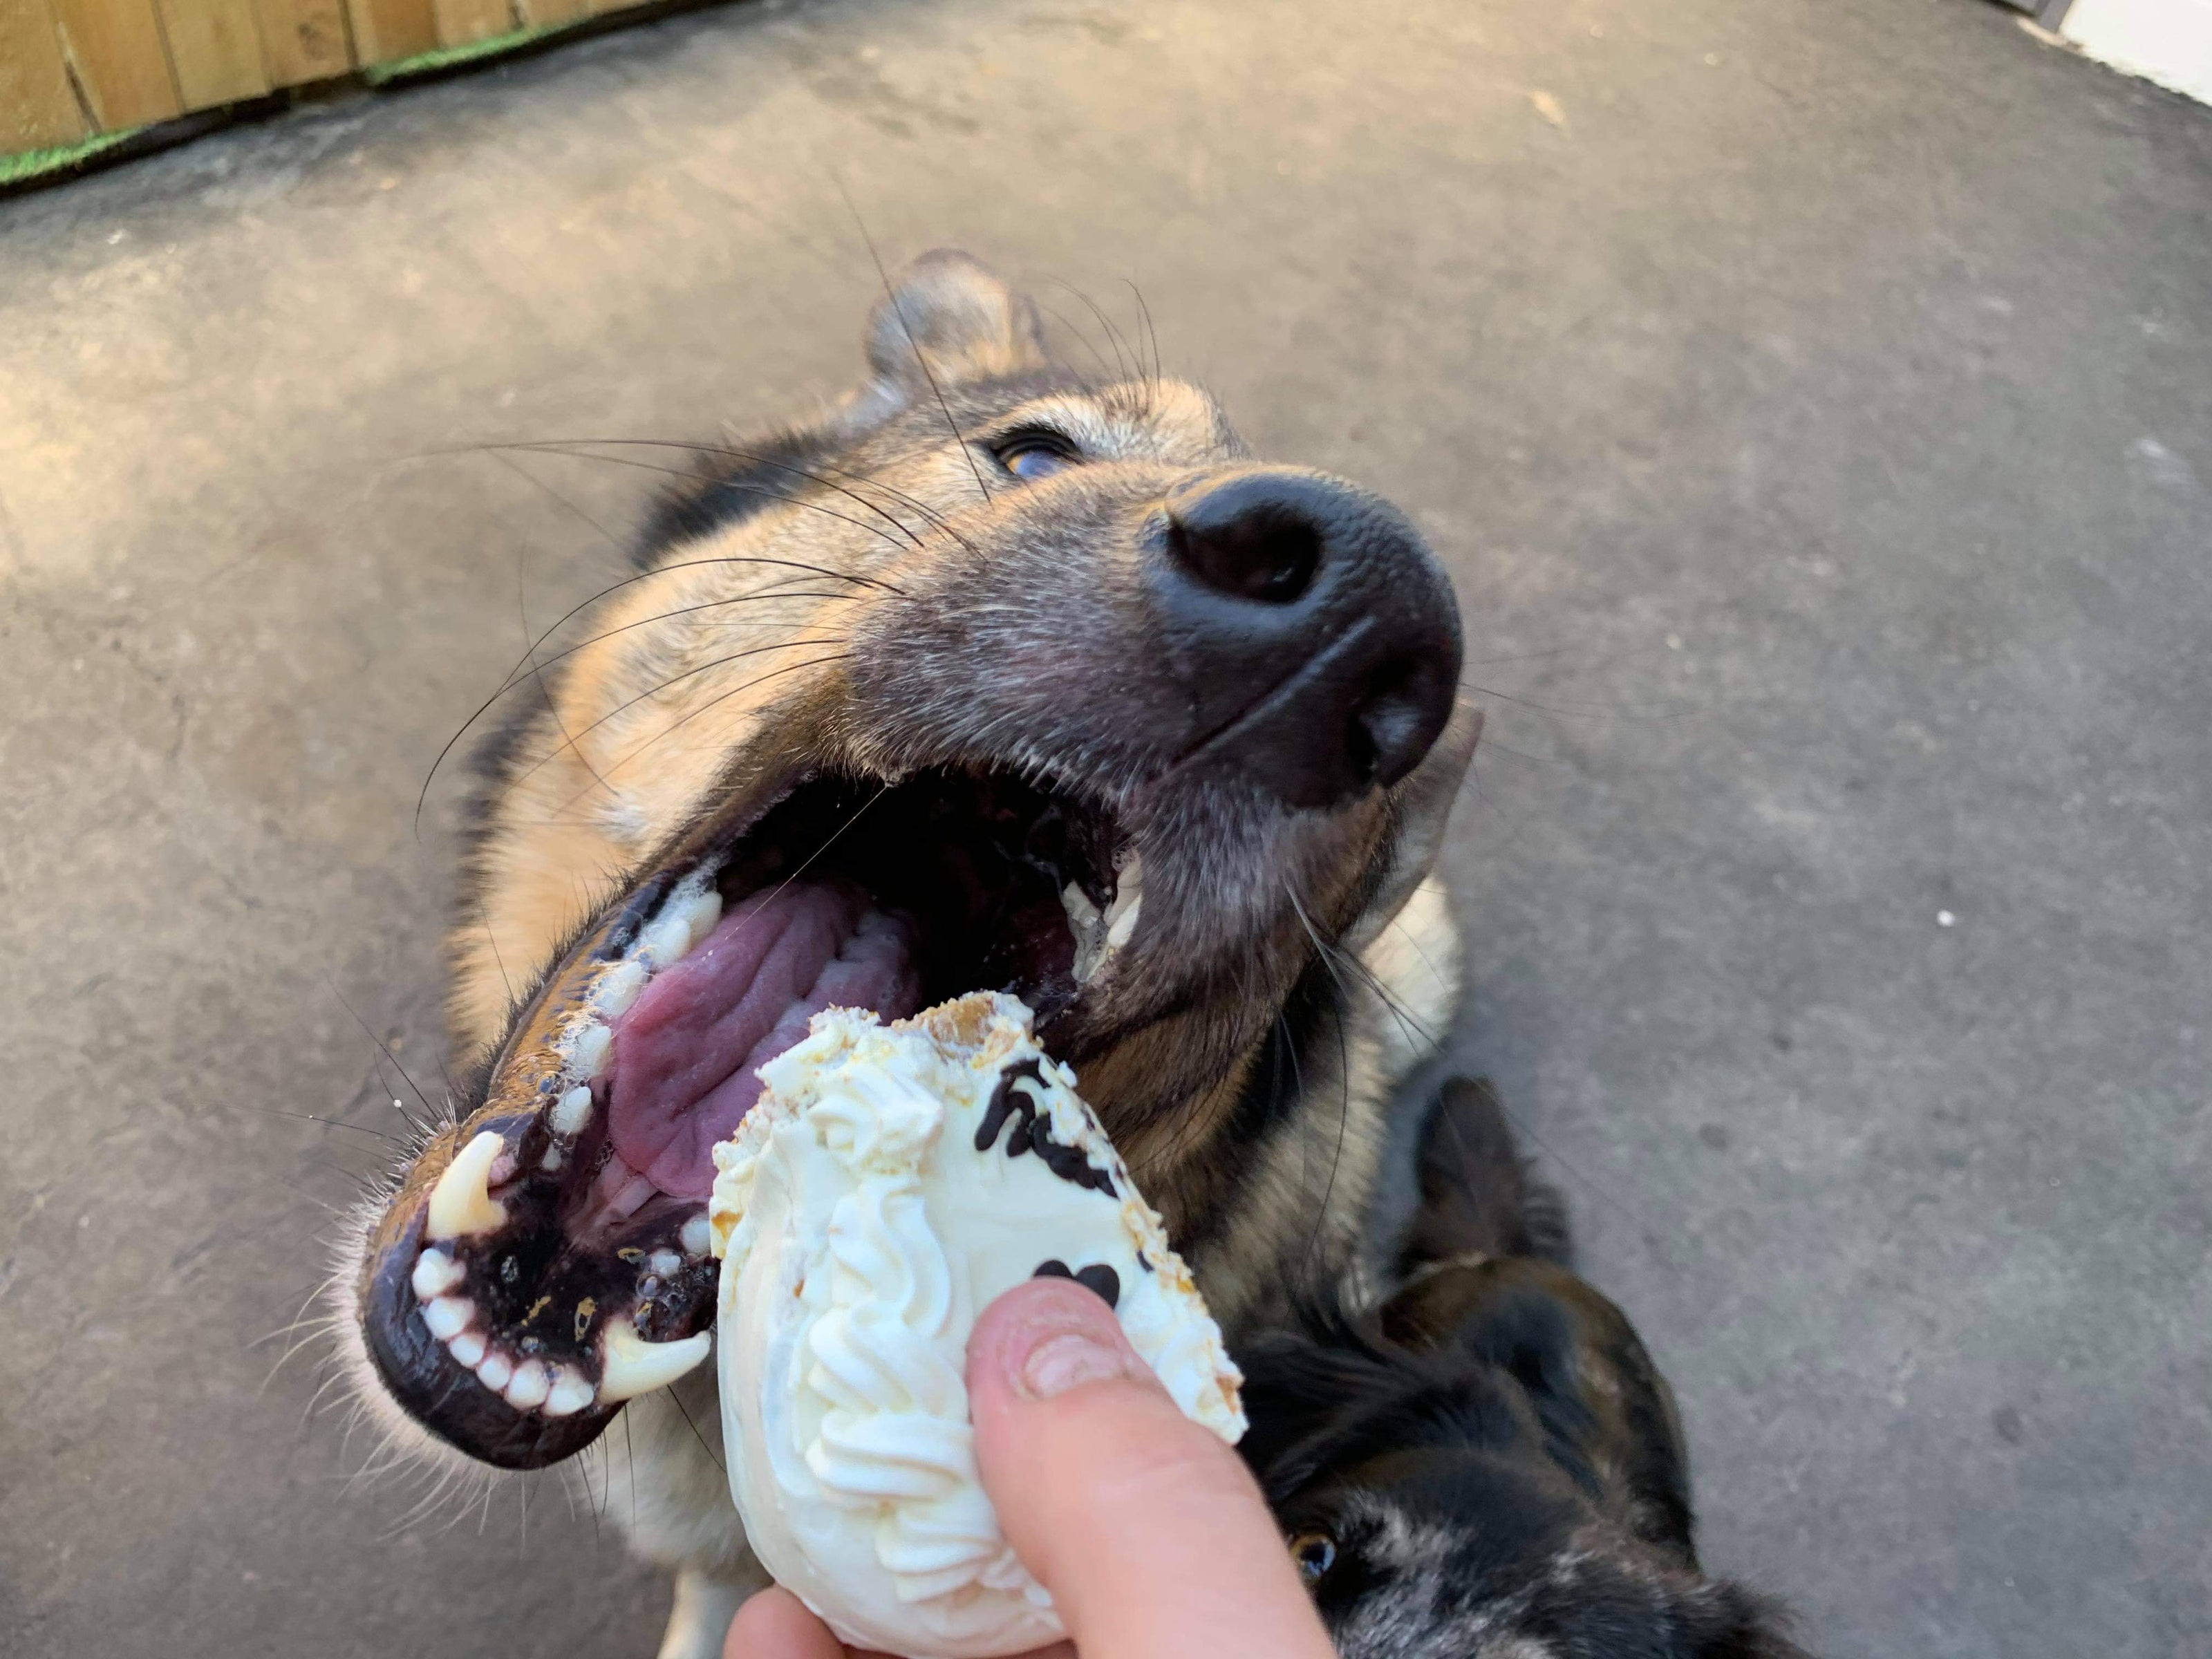 Dog eating cake